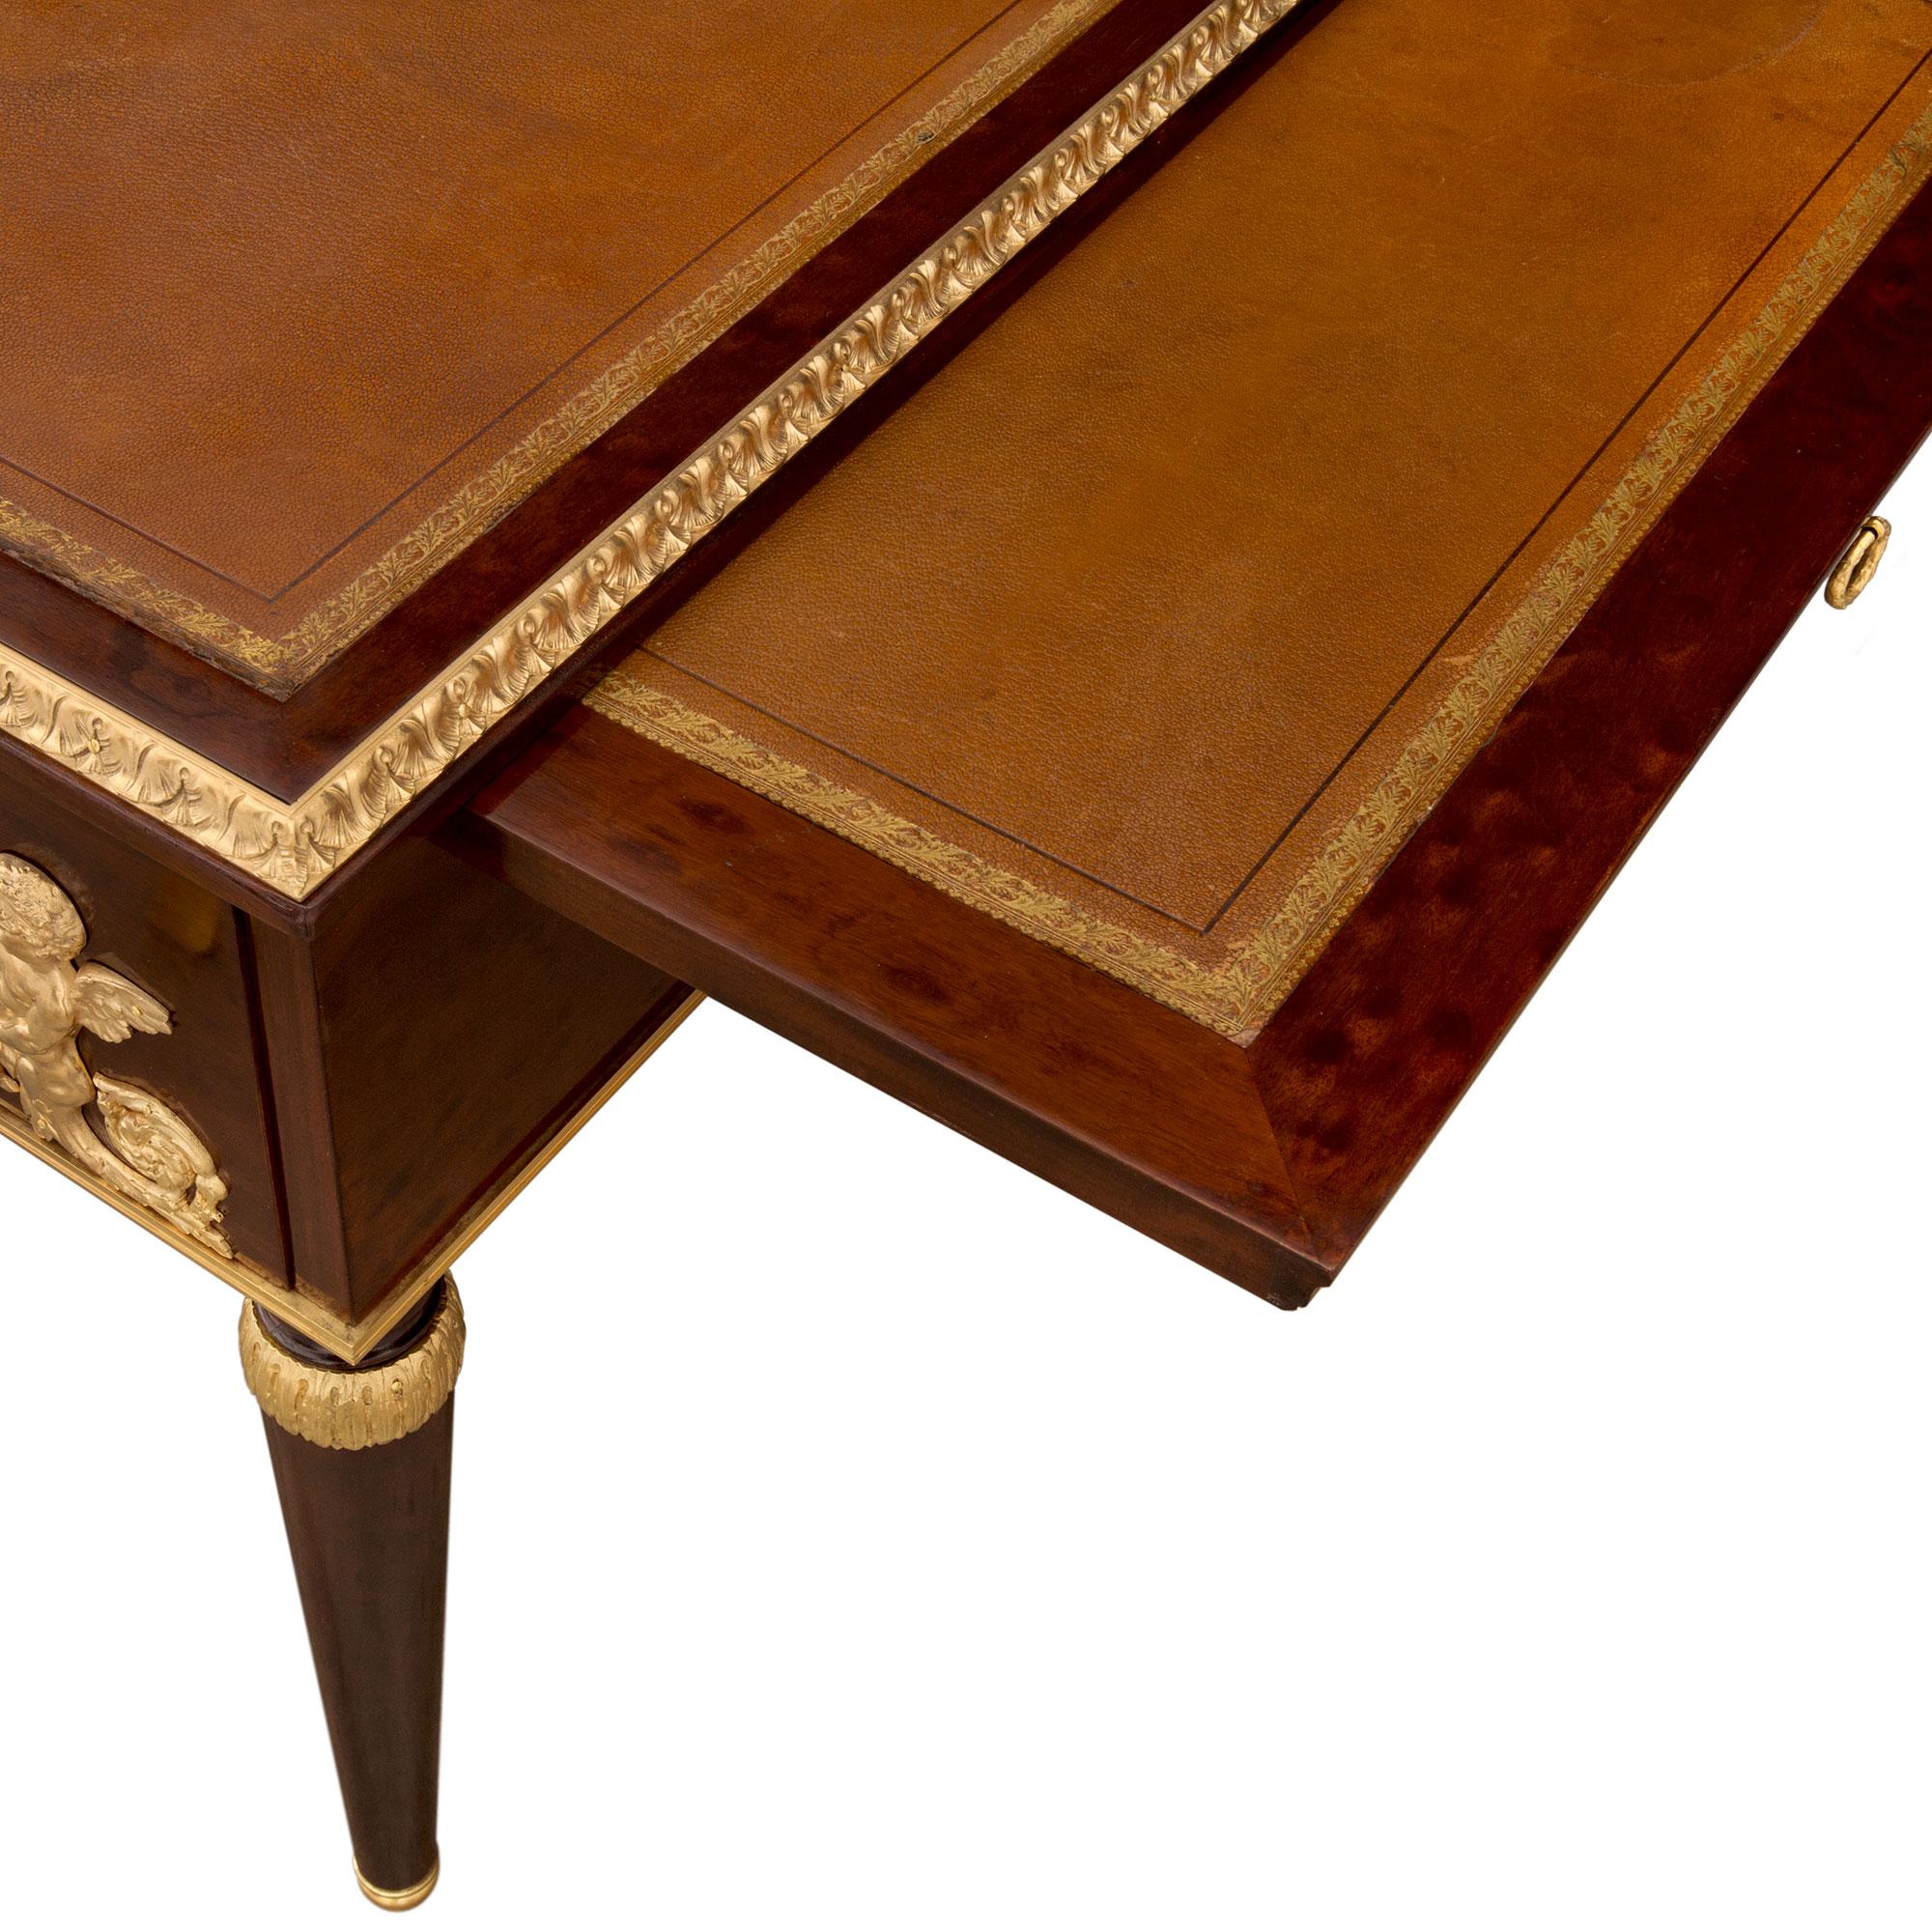 French 19th Century Belle Époque Period Mahogany, Burl Walnut and Ormolu Desk For Sale 8